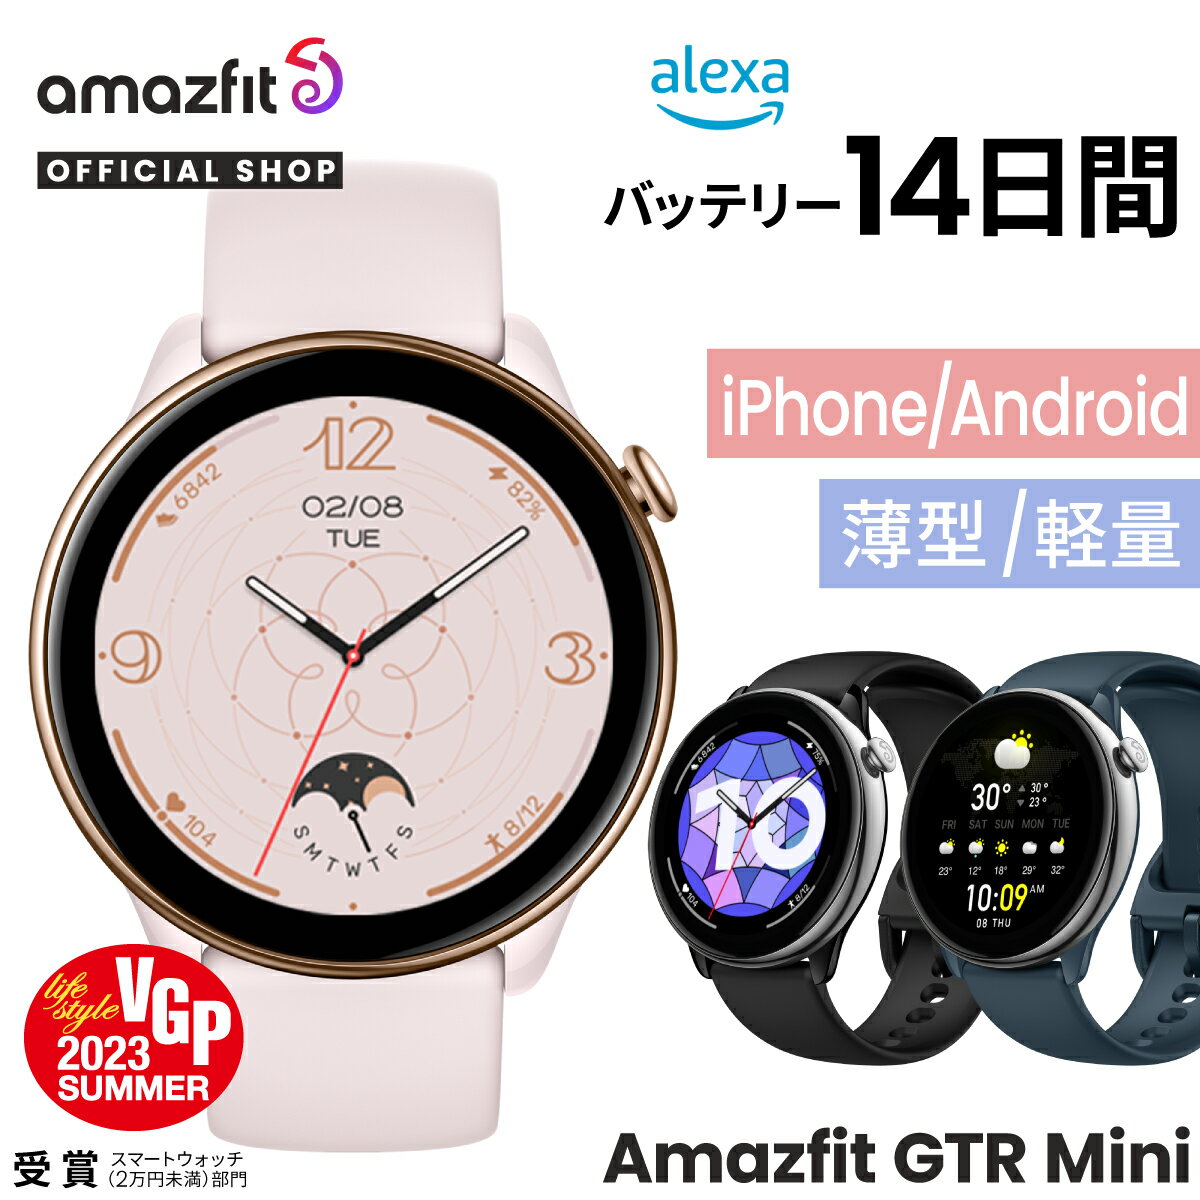 Amazfit GTR Mini スマートウォッチ 血中酸素 睡眠 ストレス レディース メンズ 女性 男性 android iphone対応 line通知 常時表示 着信 振動 音楽再生 丸形 丸型 着信通知 GPS 生理周期 腕時計 ブランド